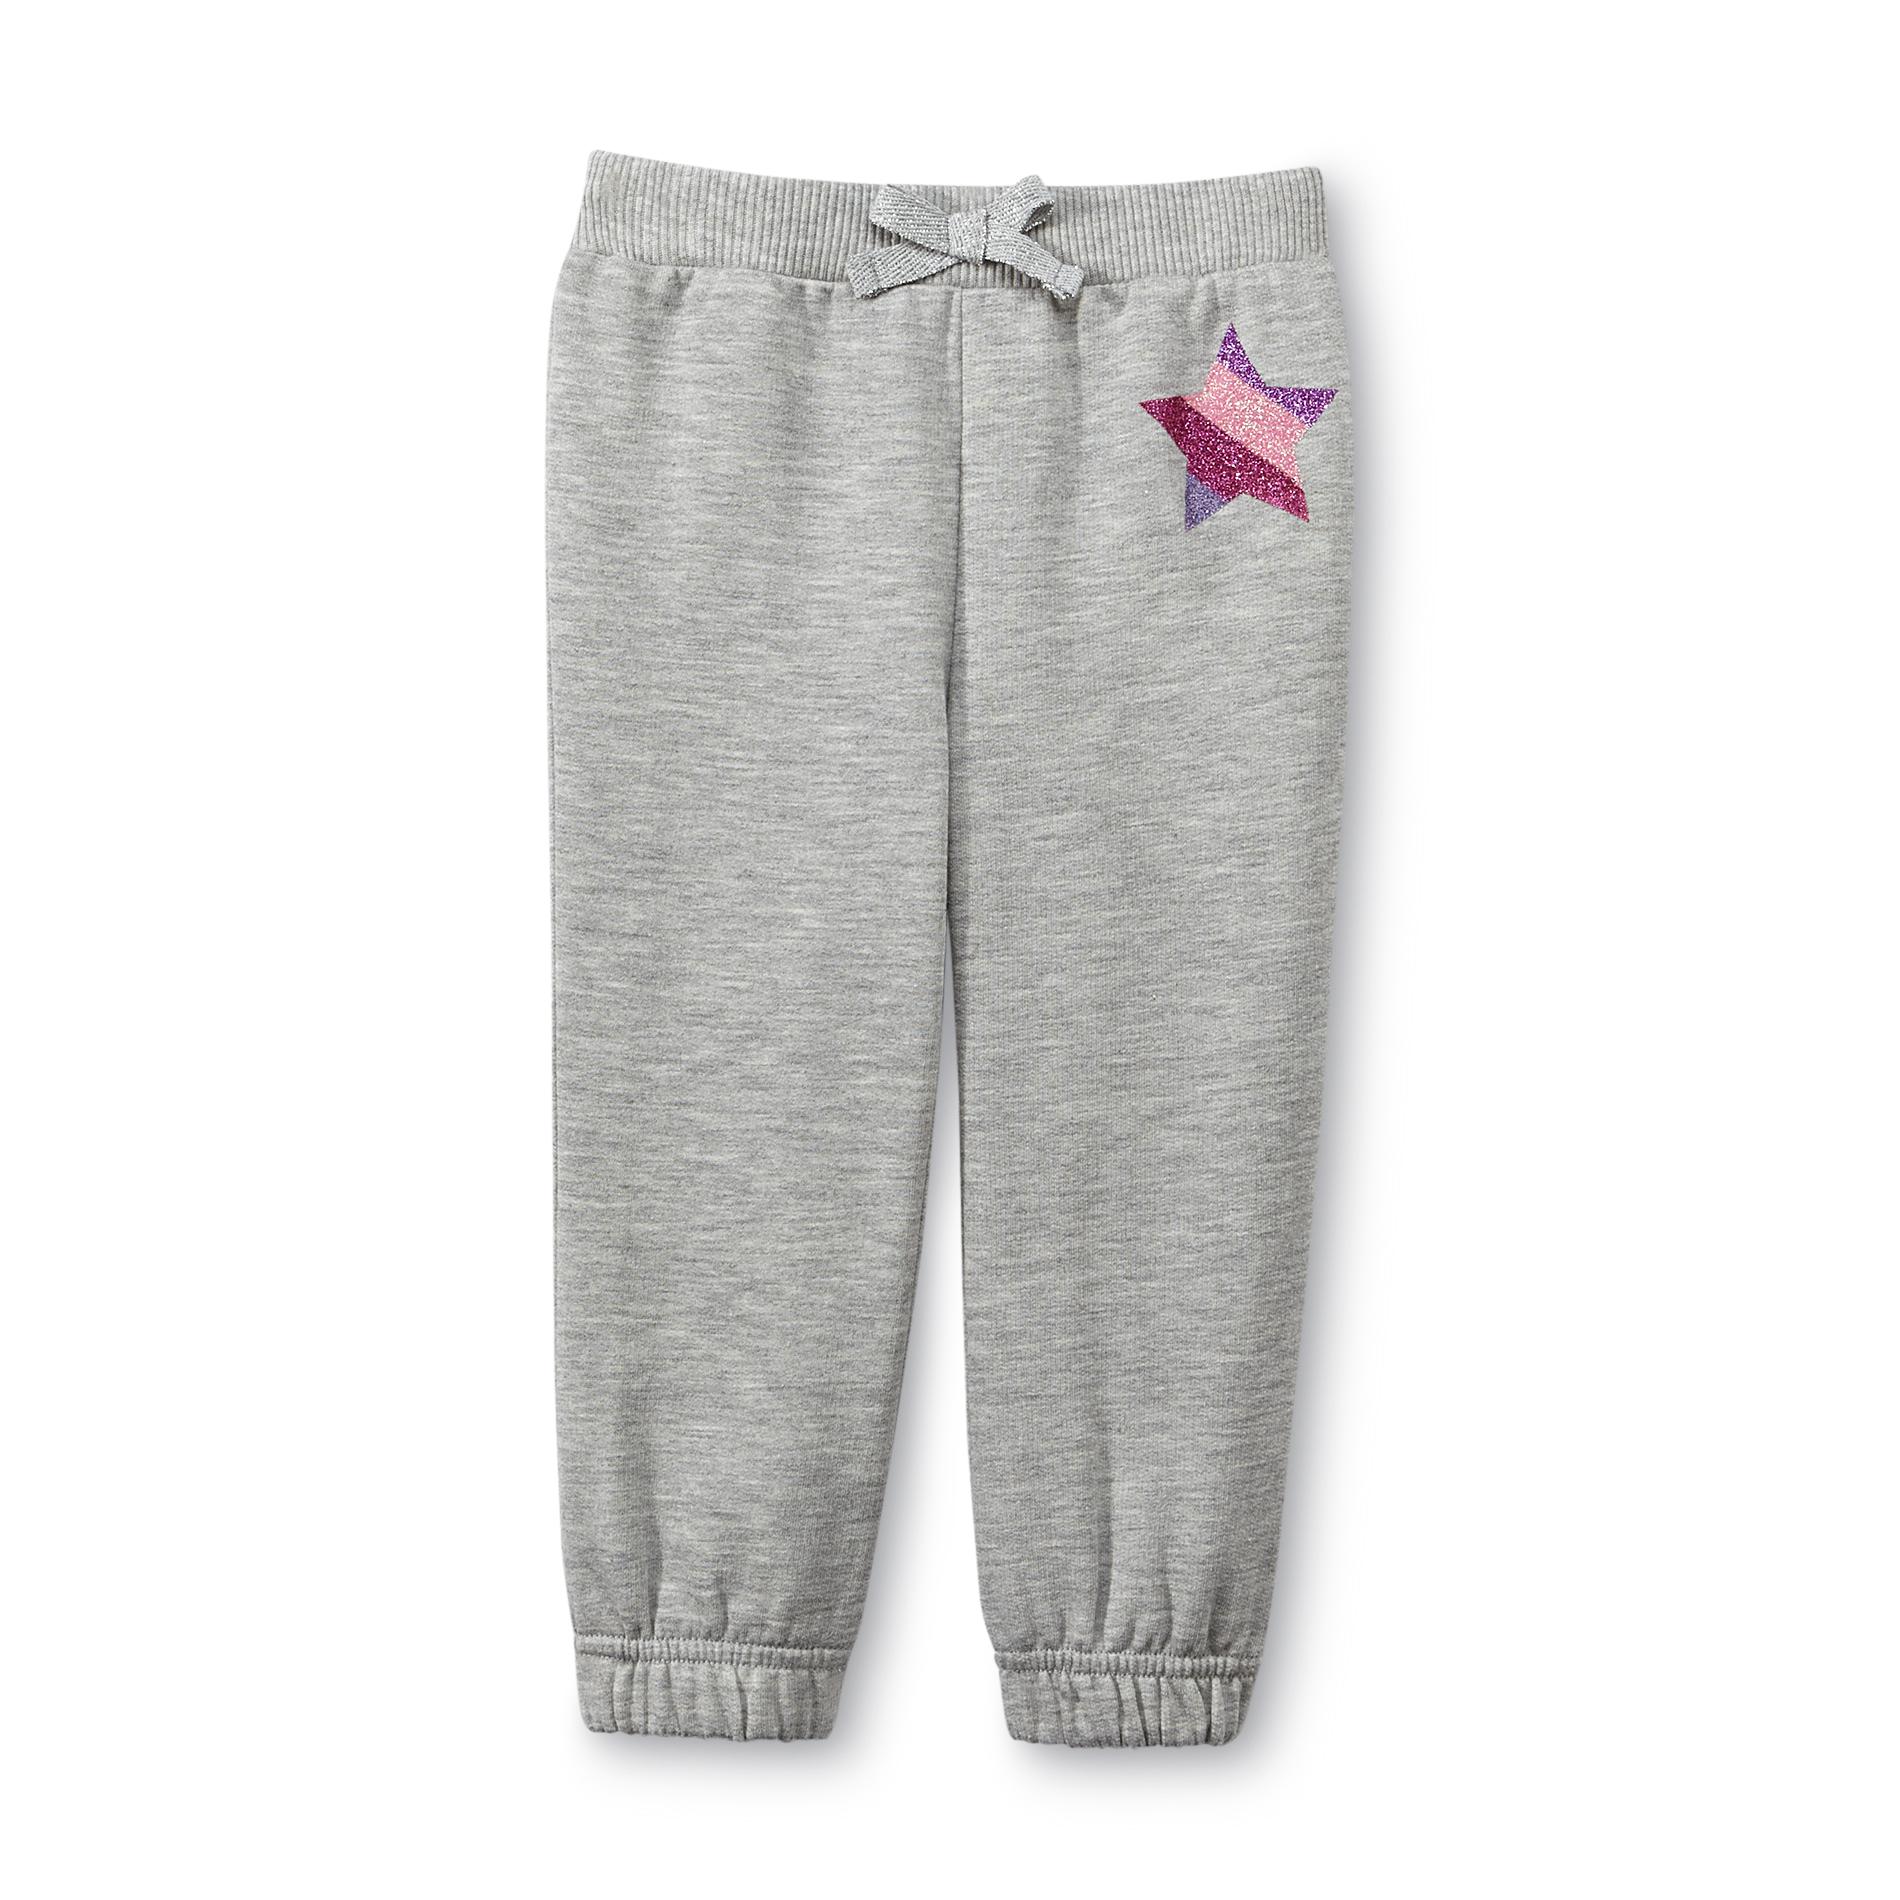 WonderKids Infant & Toddler Girls Sweatpants - Glitter Star